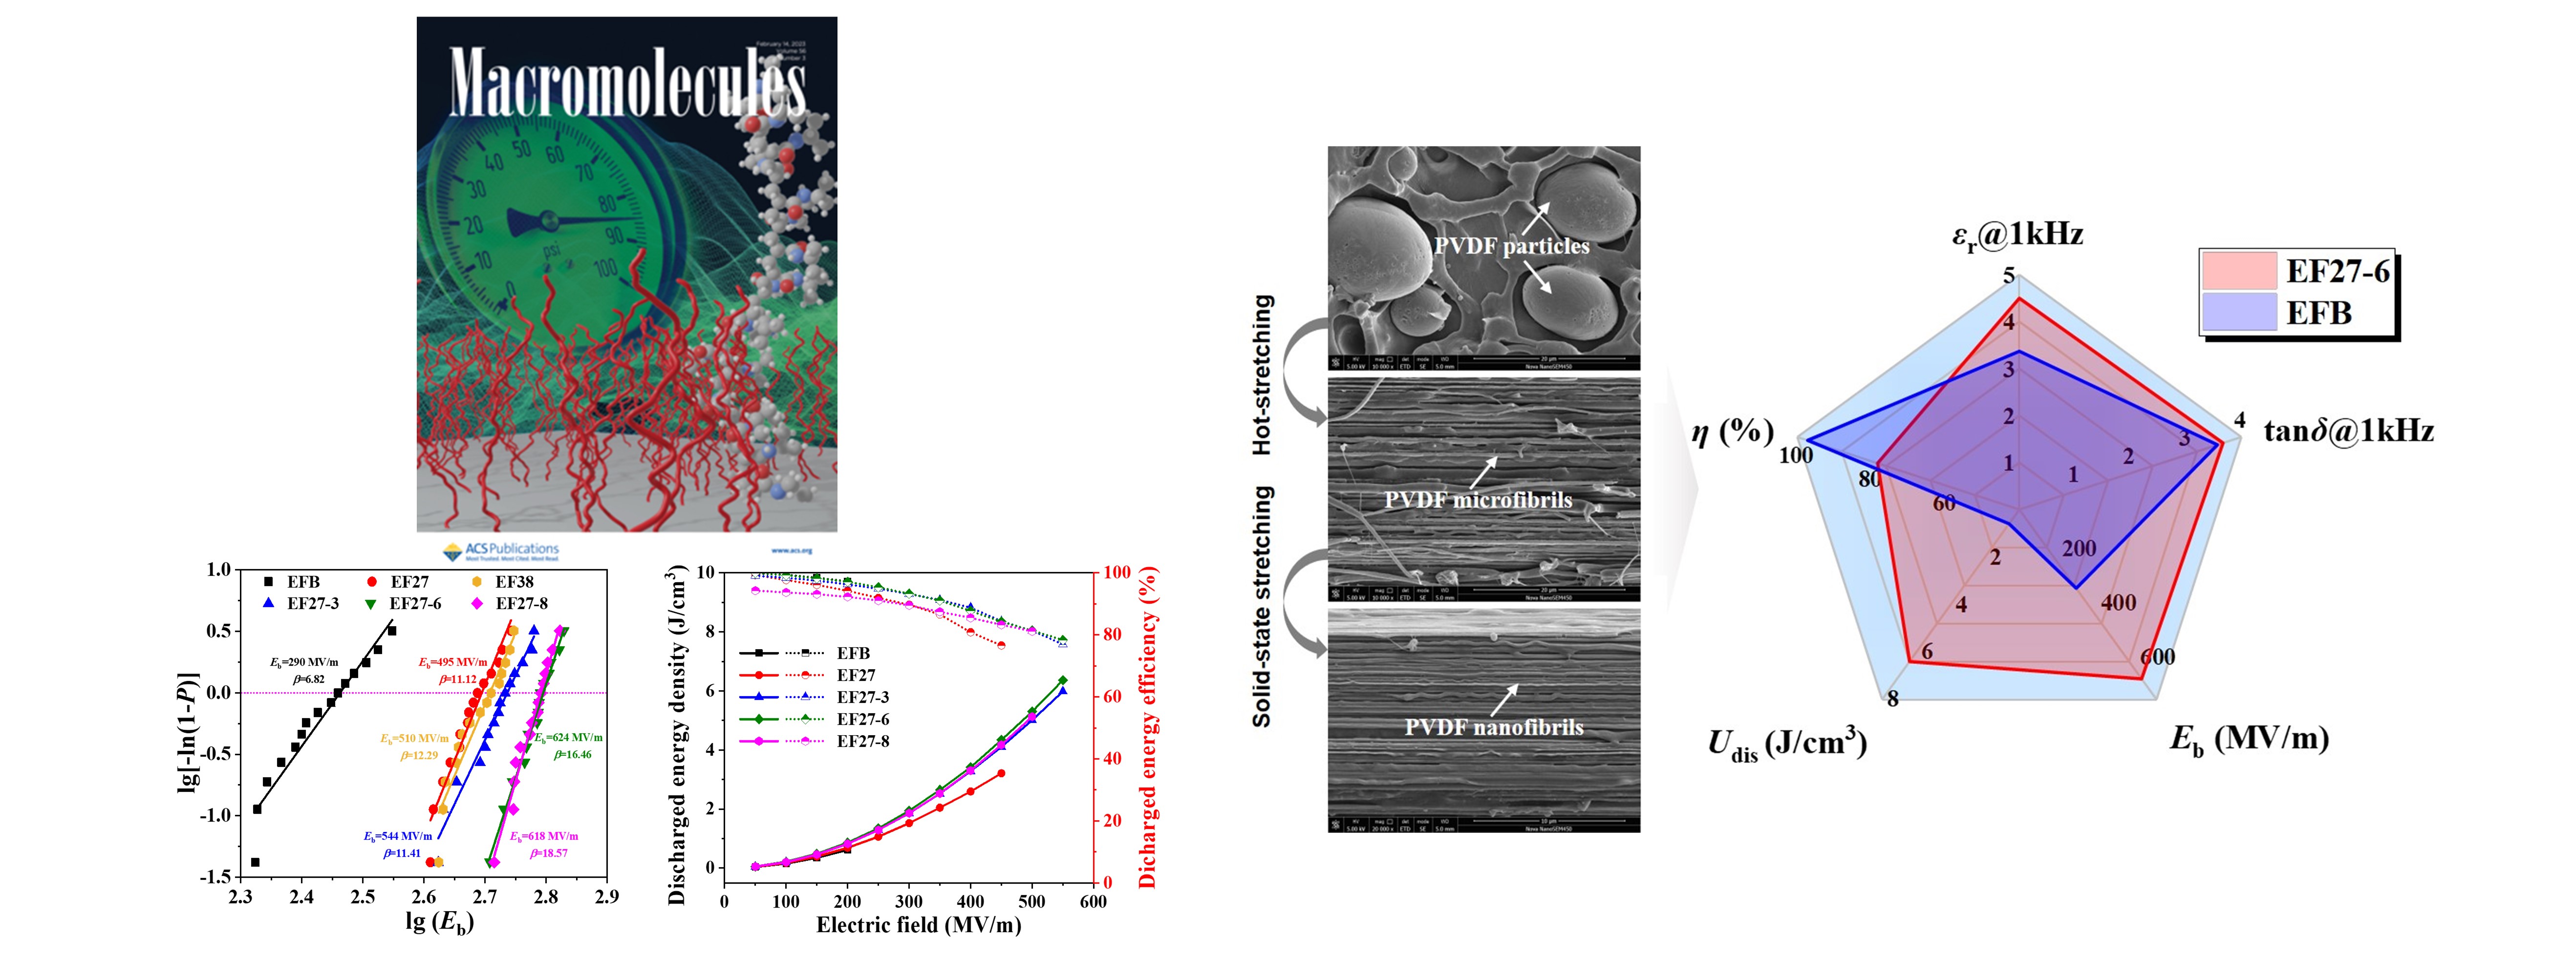 Polyvinylidene fluoride nanofibrils based dielectric film paper published in Macromolecules